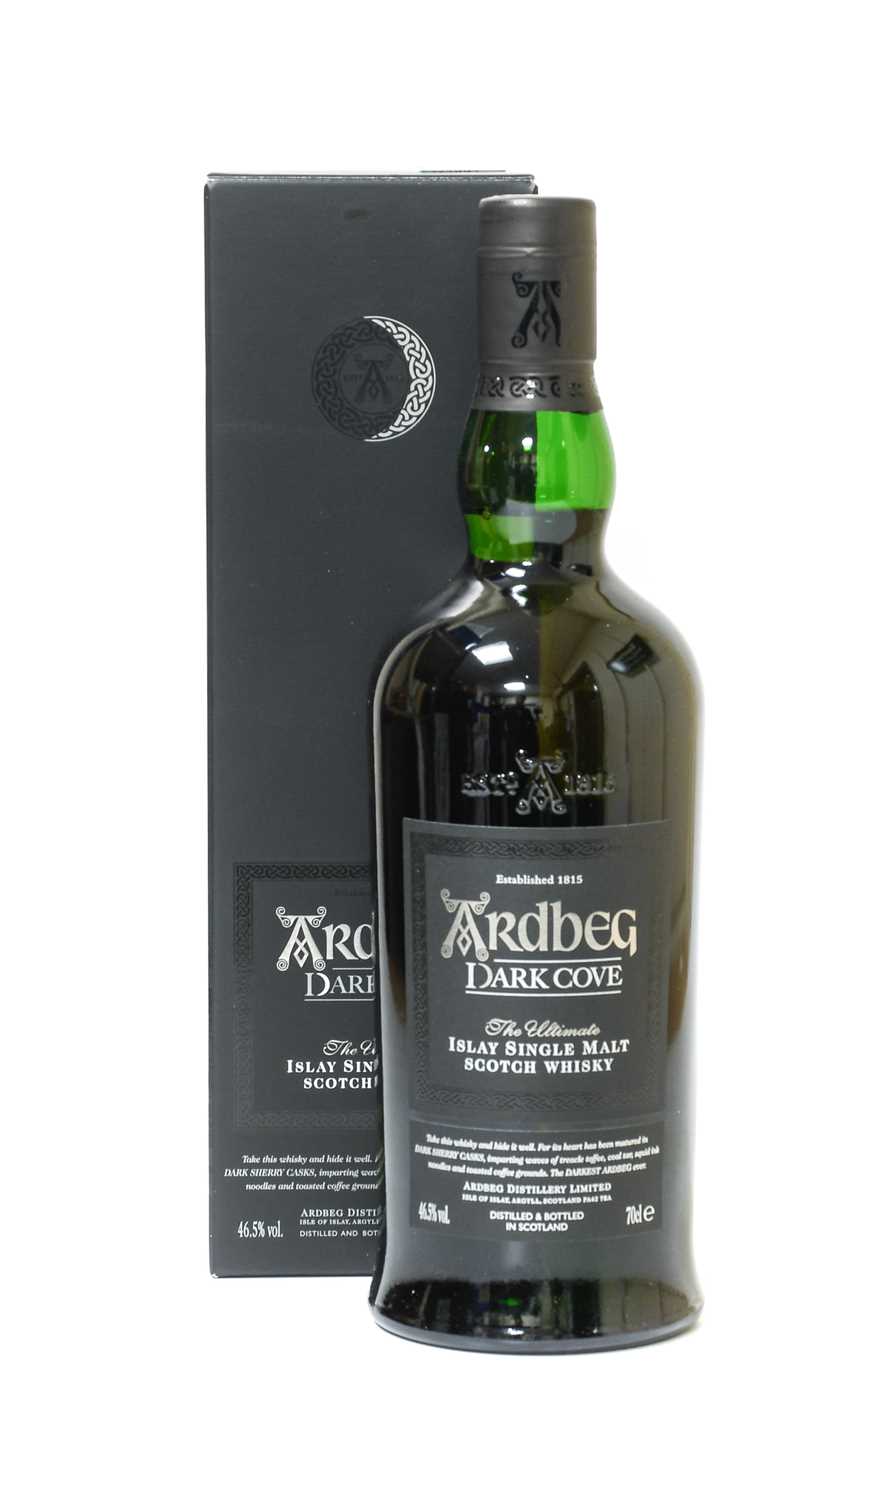 Ardbeg "Dark Cove" Islay Single Malt Scotch Whisky, 46.5% vol 700ml, in original cardboard sleeve (